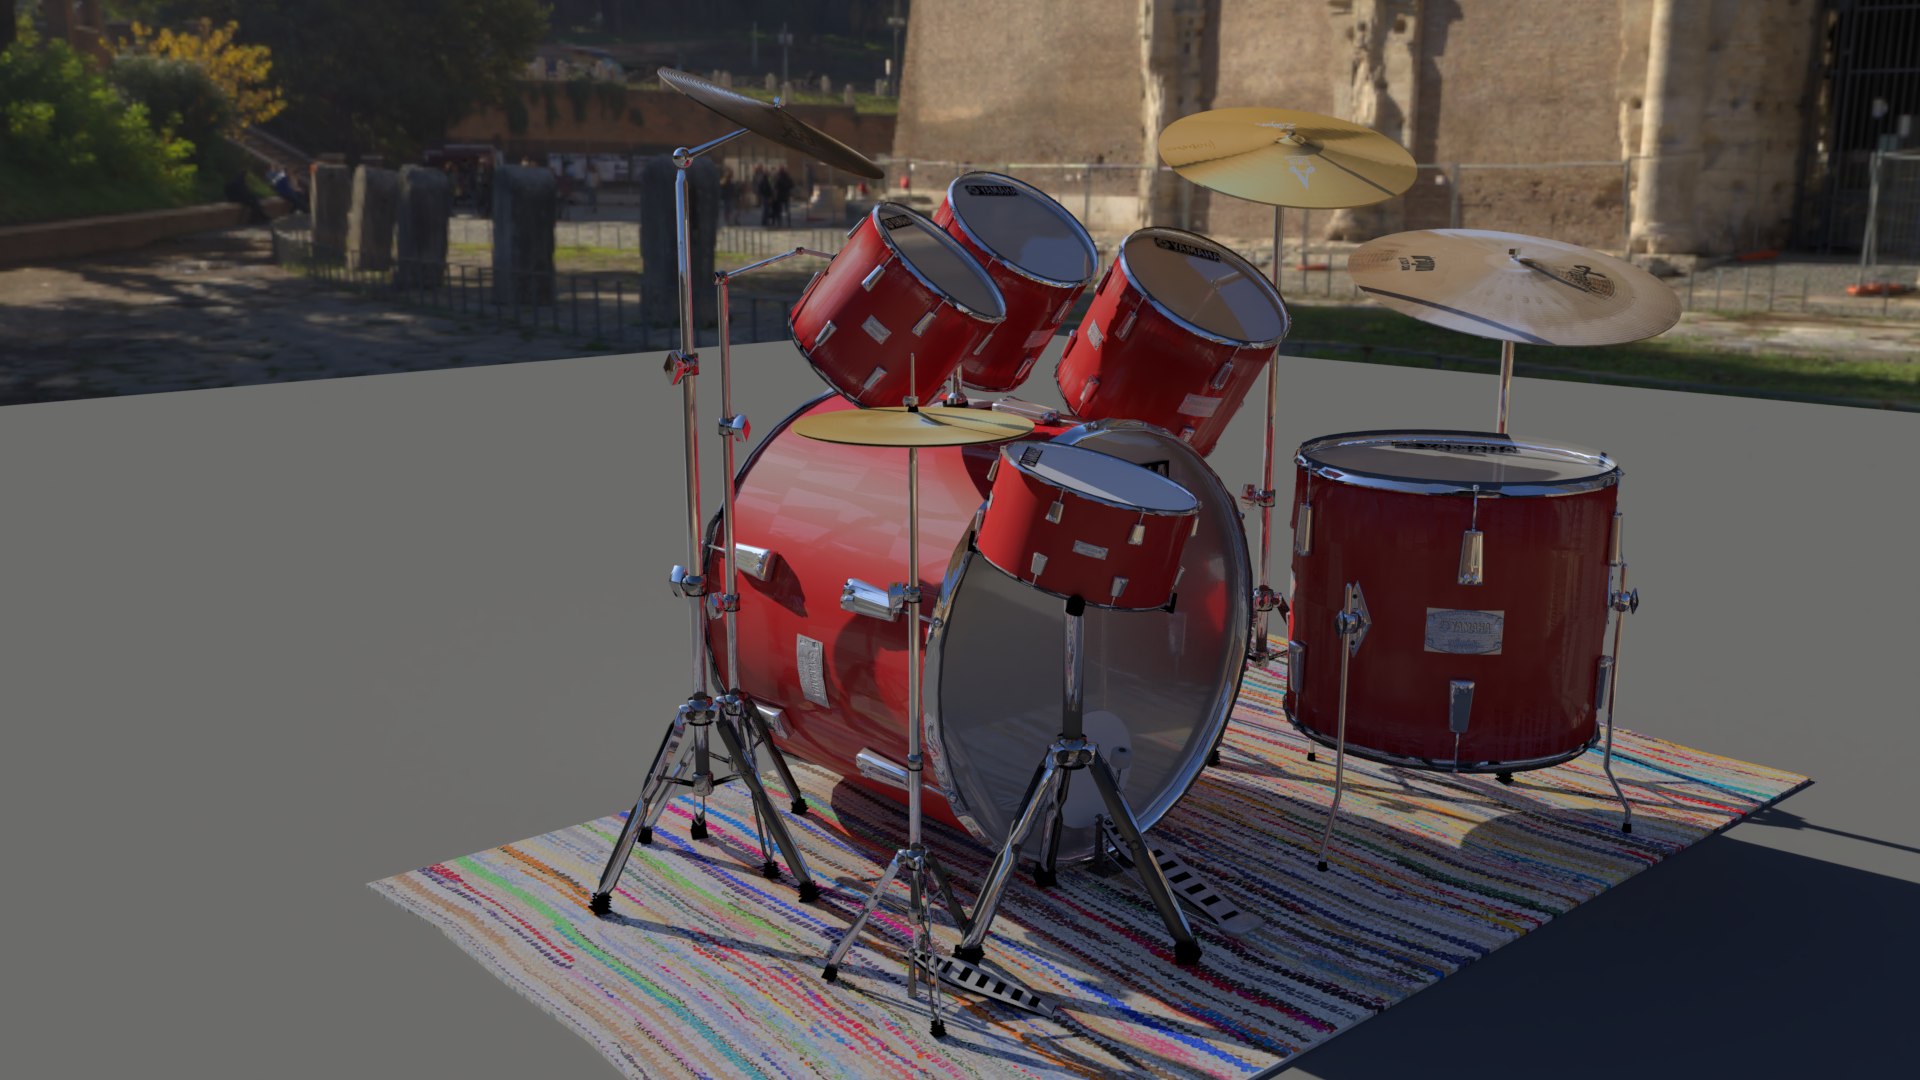 Drum Kit Yamaha preview image 1